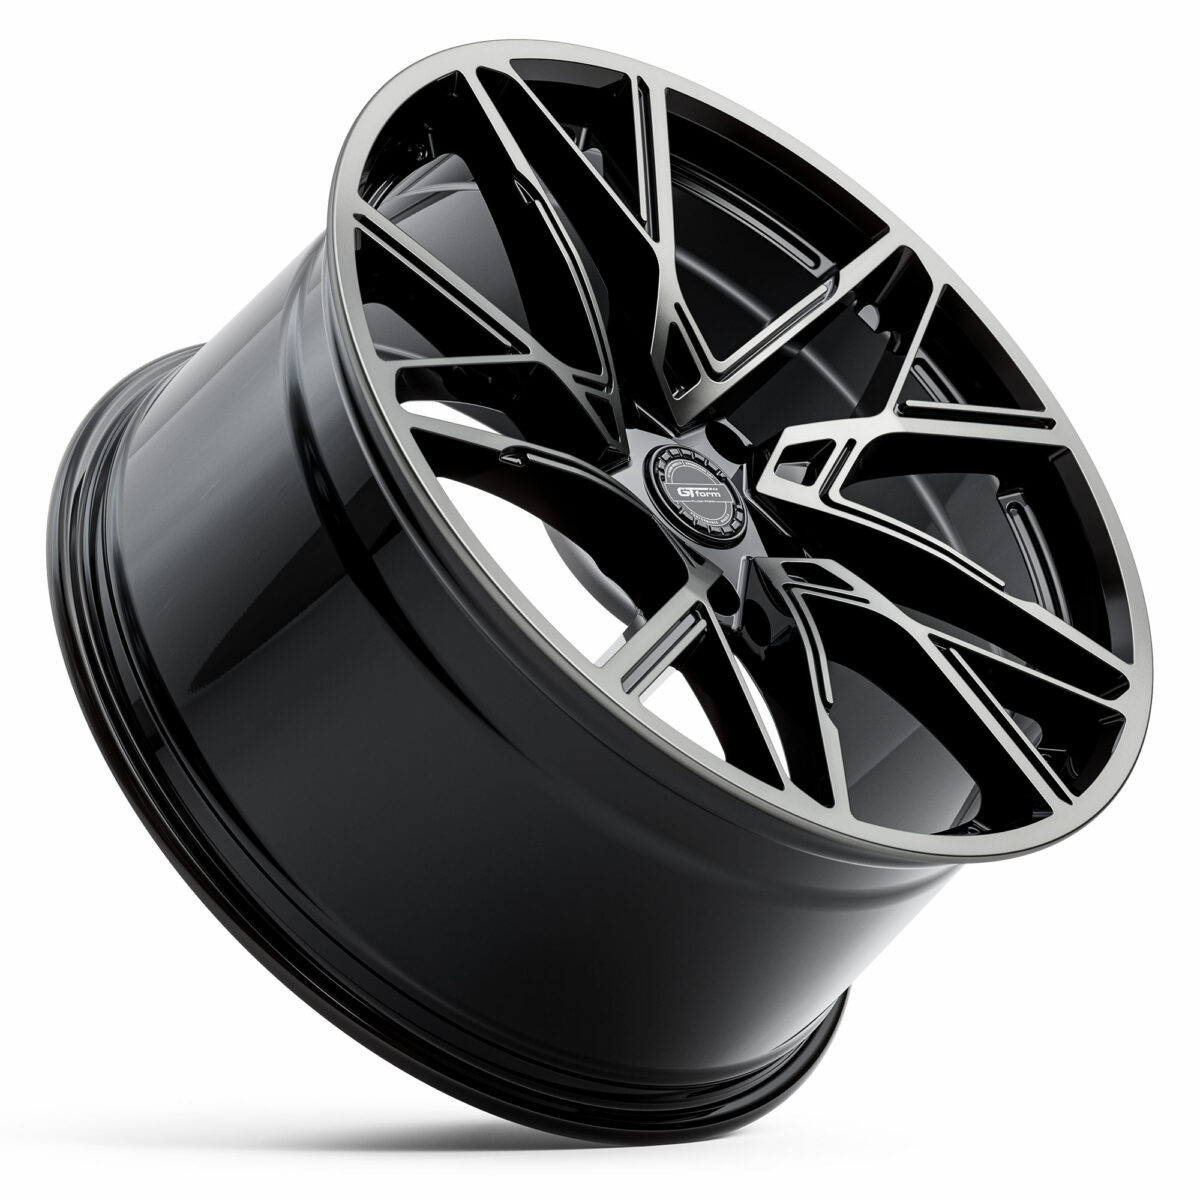 GT Form Interflow Gloss Black Tinted Rims 19 20 inch Performance Wheels